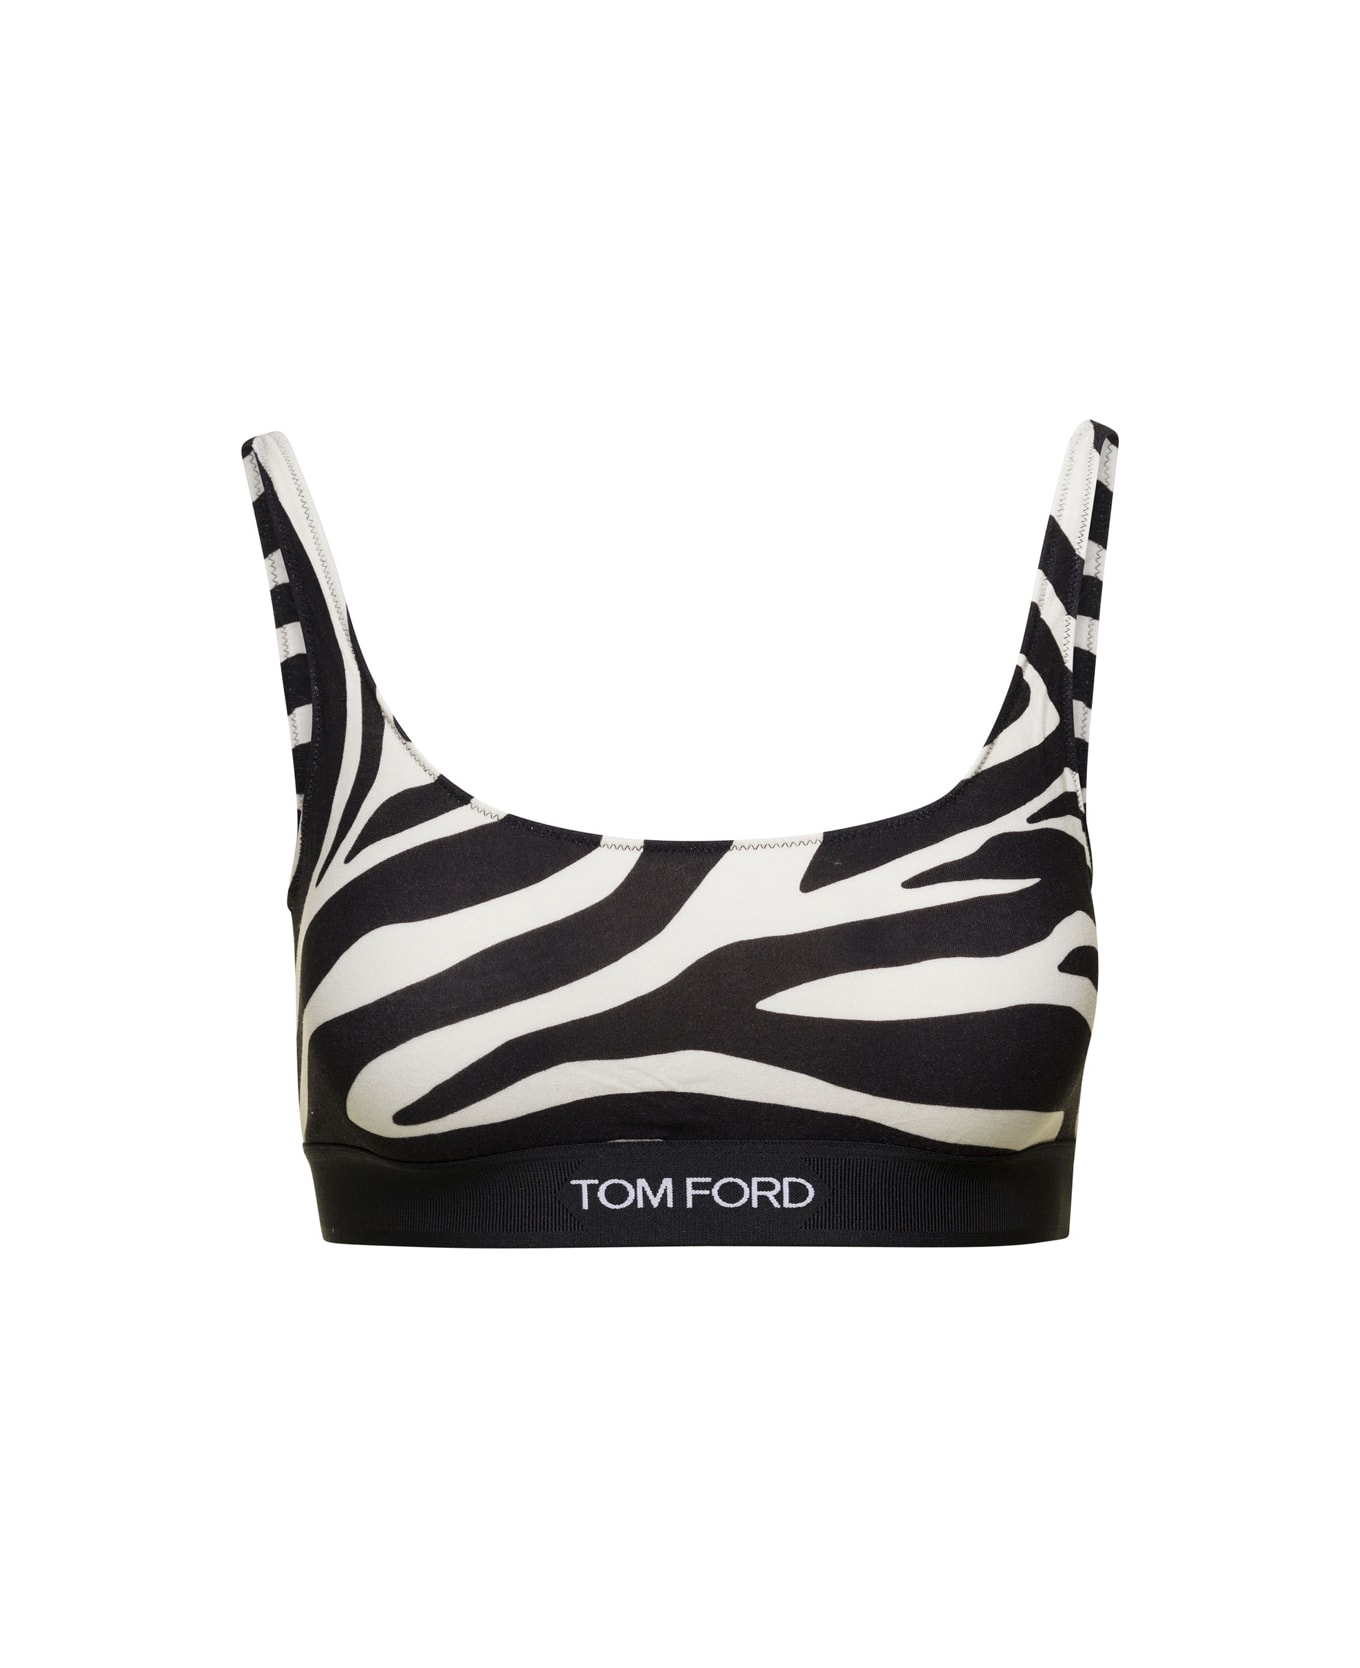 Tom Ford Black And White Zebra-striped Bralette In Techno Fabric Stretch Woman - White/black